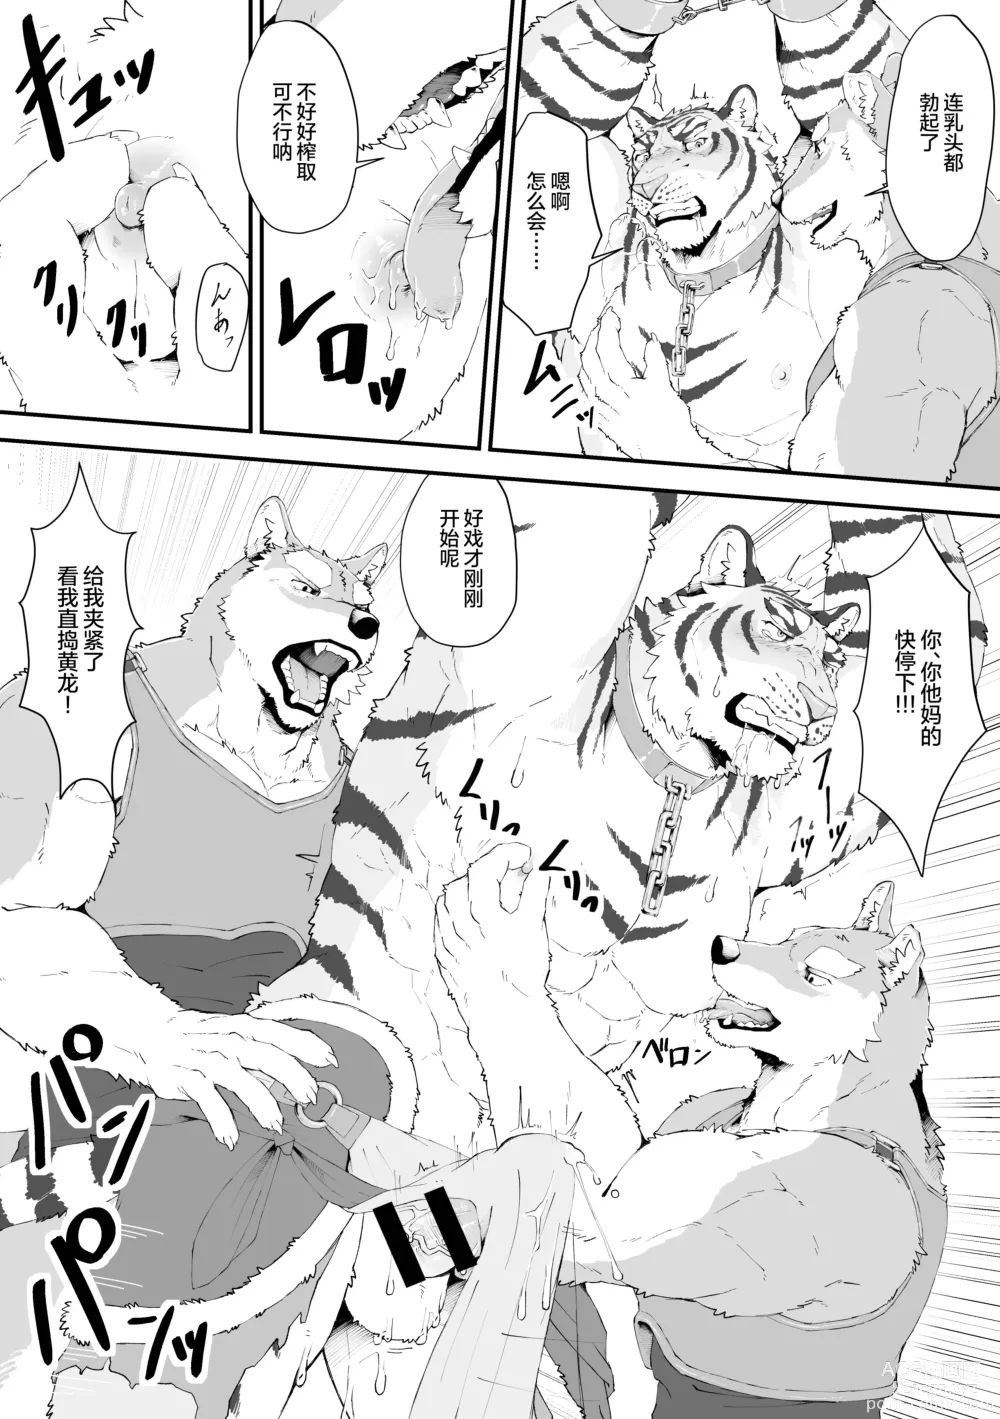 Page 7 of doujinshi 口蜜腹剑